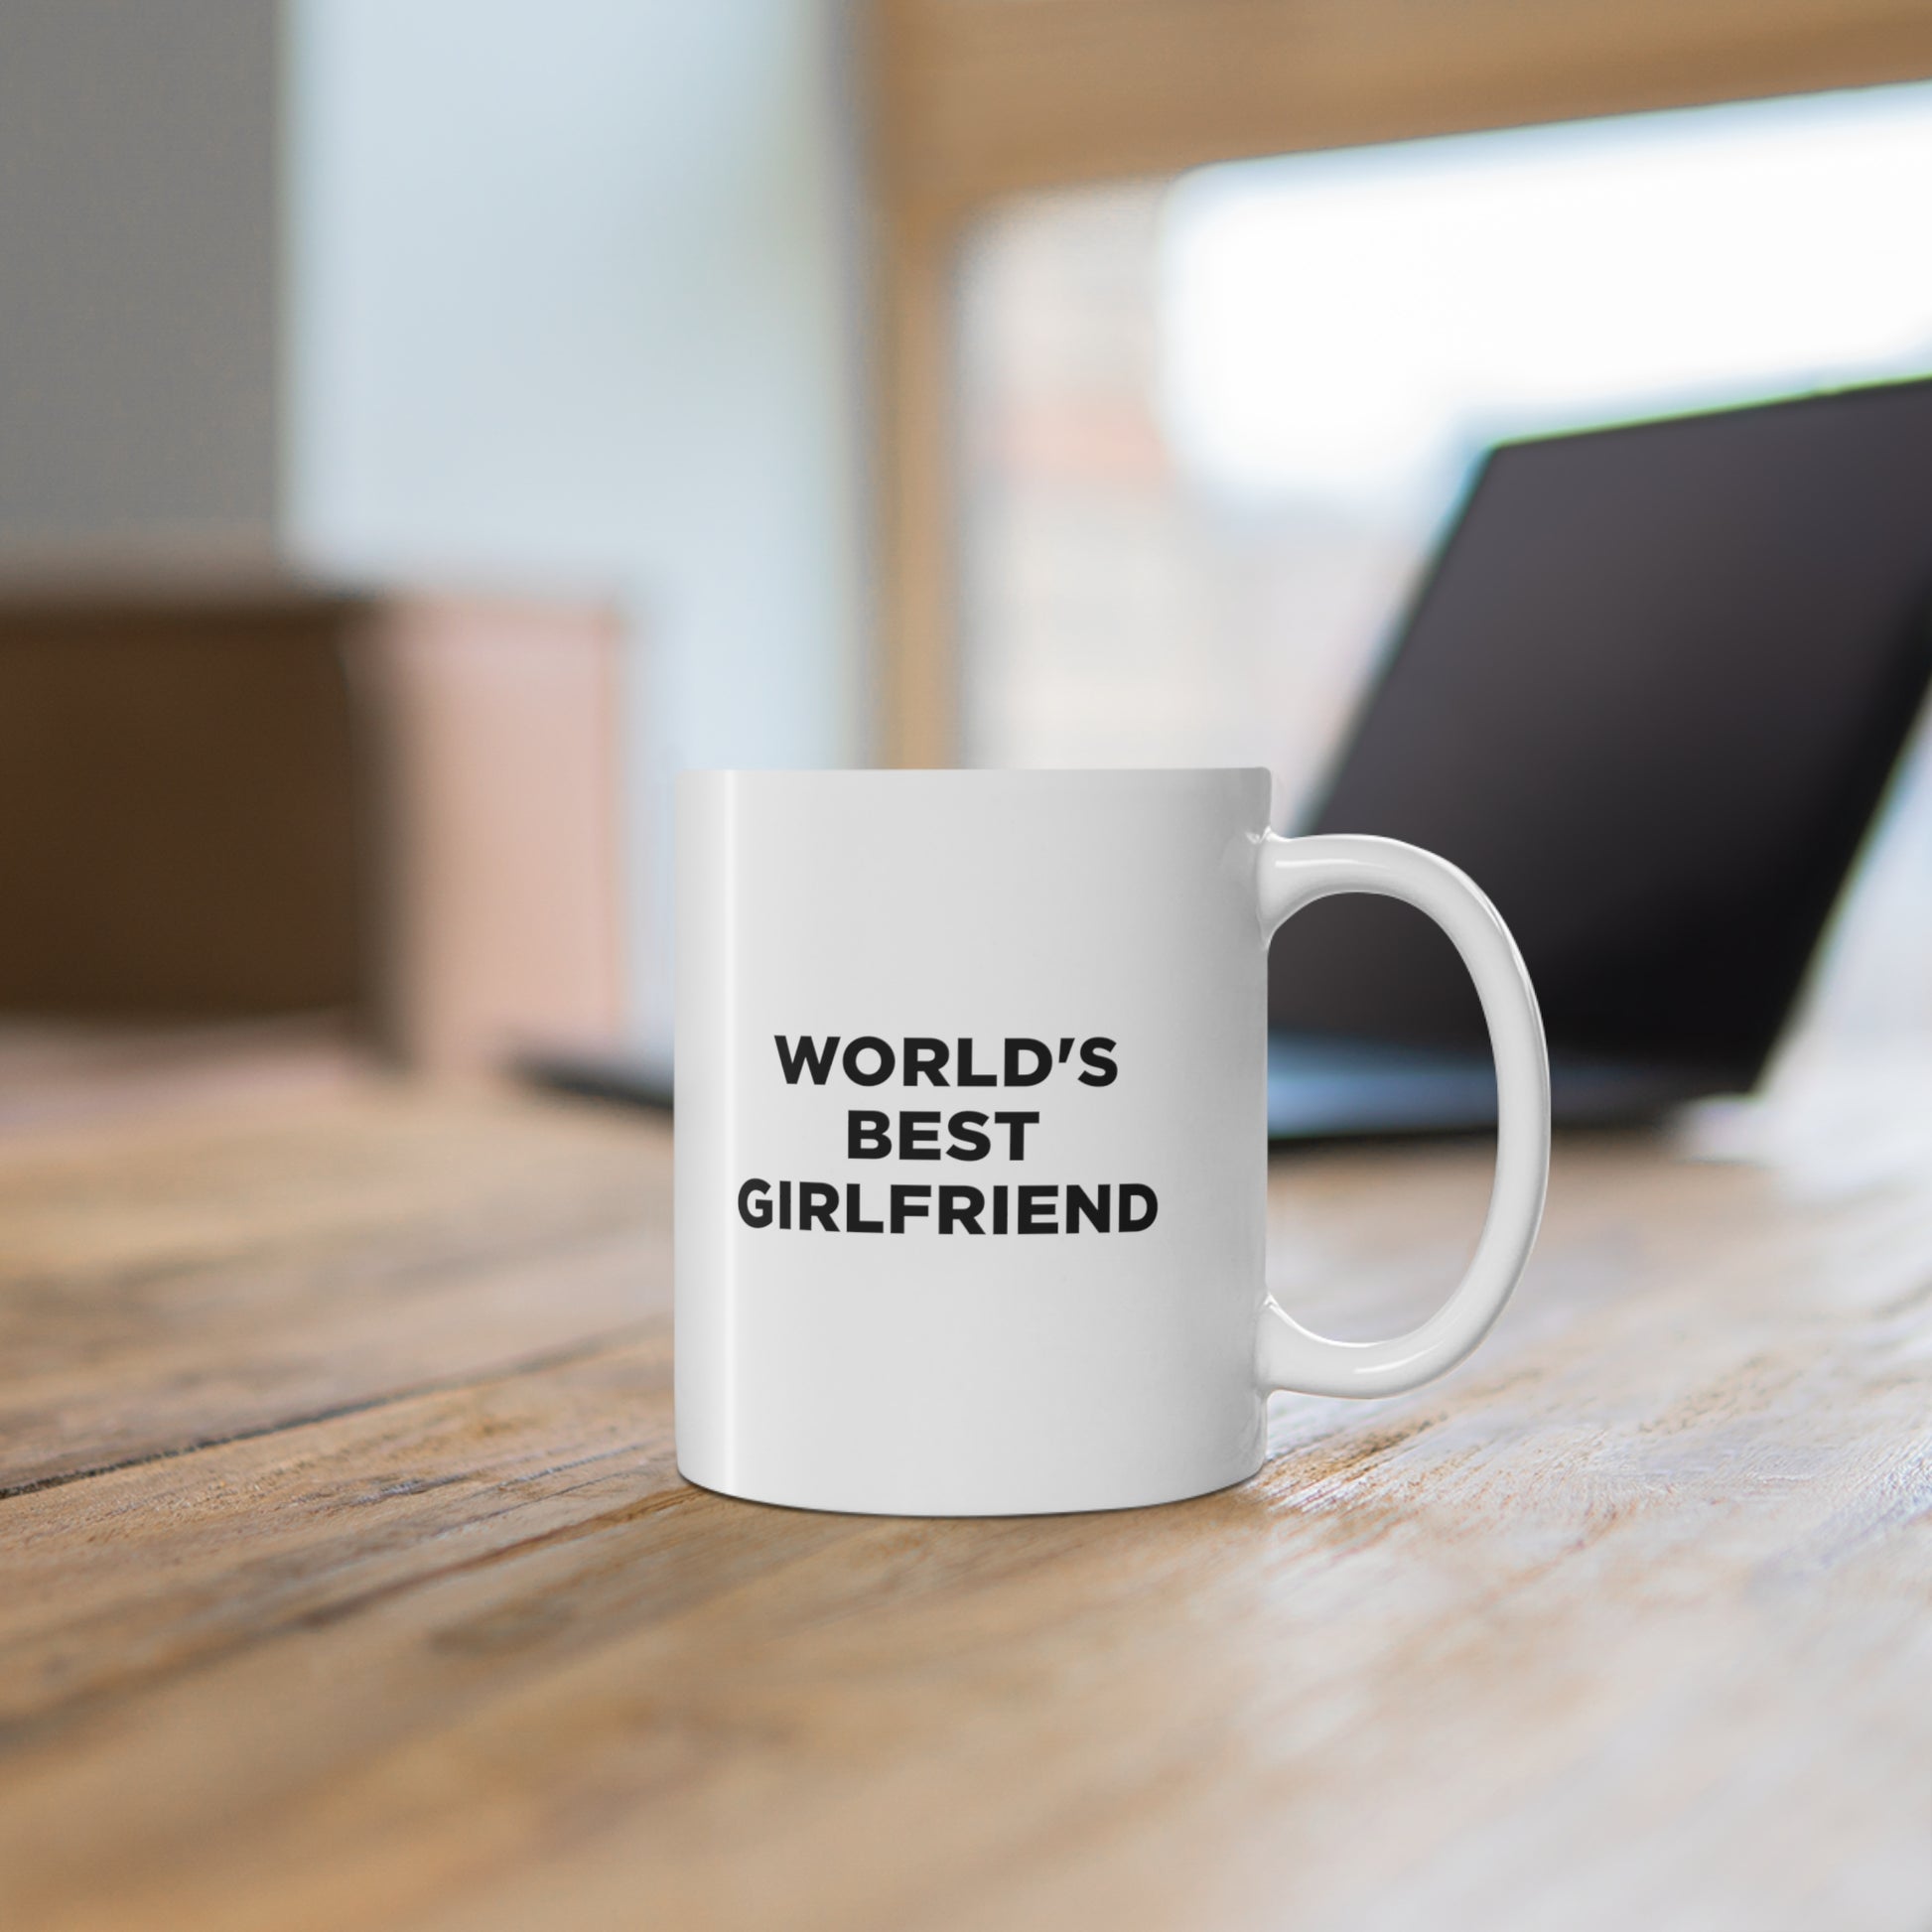 11oz ceramic mug with quote World's Best Girlfriend